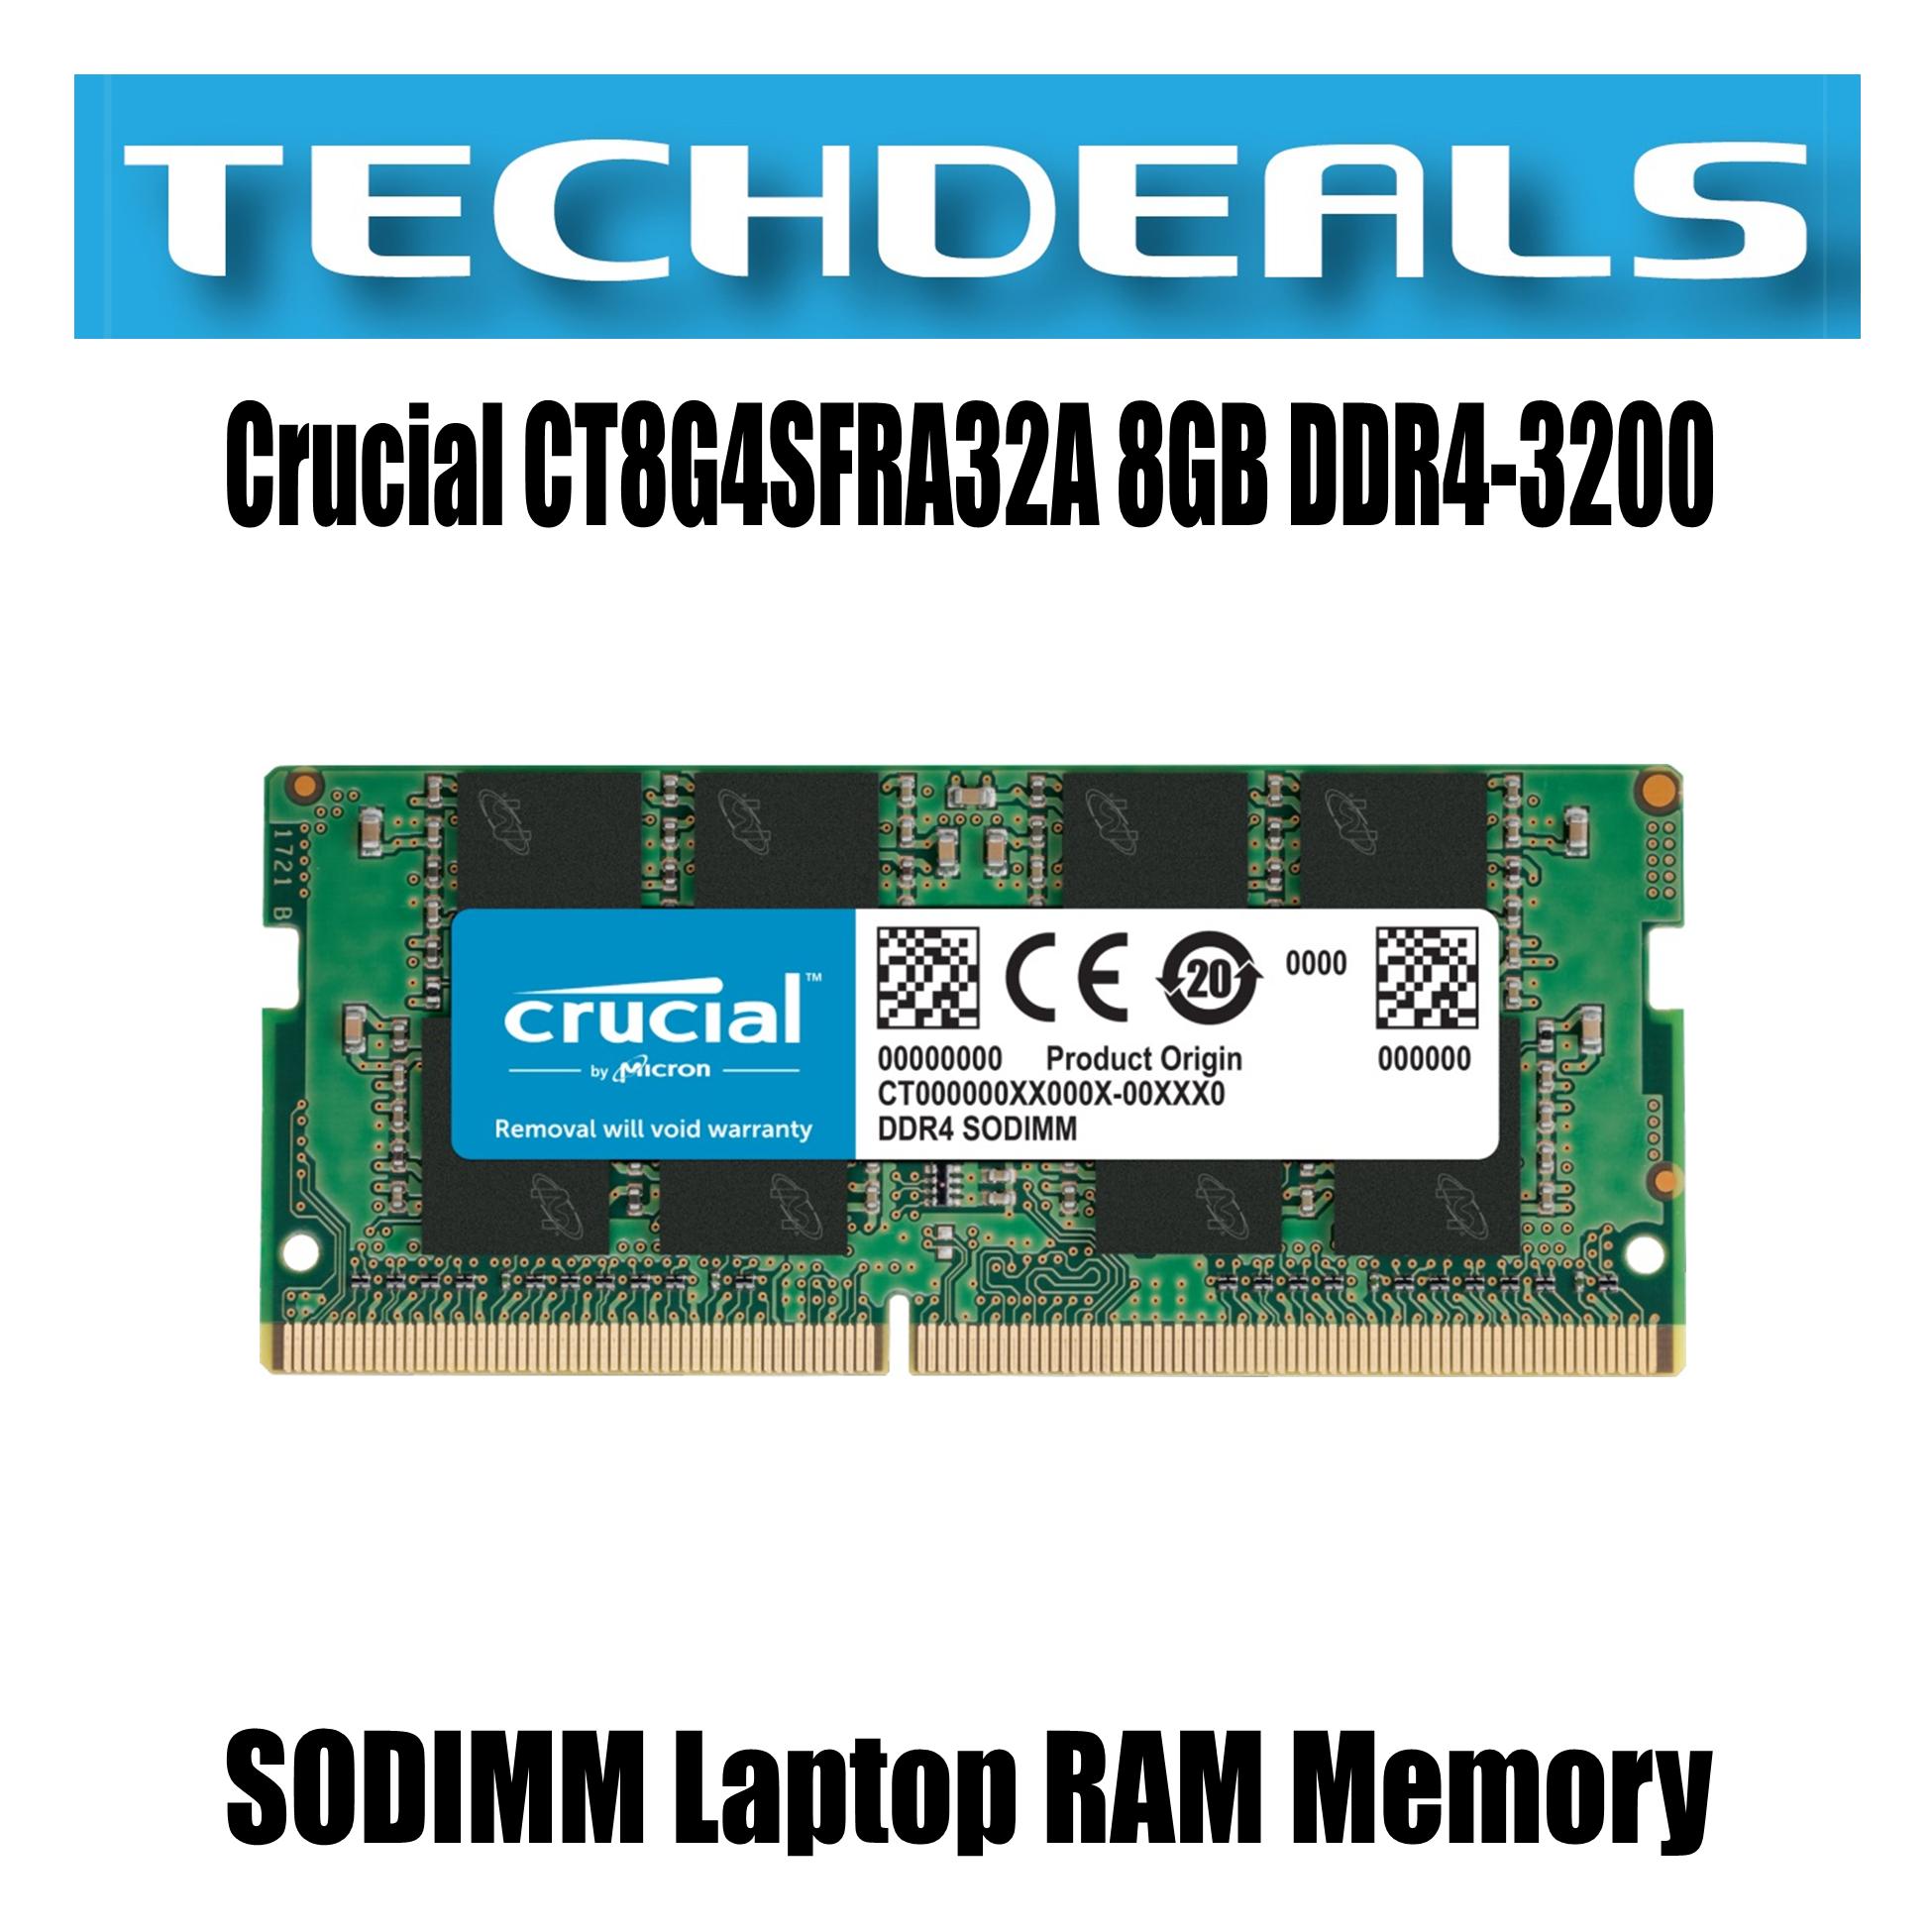 Crucial CT8G4SFRA32A 8GB DDR4-3200 Lazada Memory Singapore SODIMM RAM | Laptop